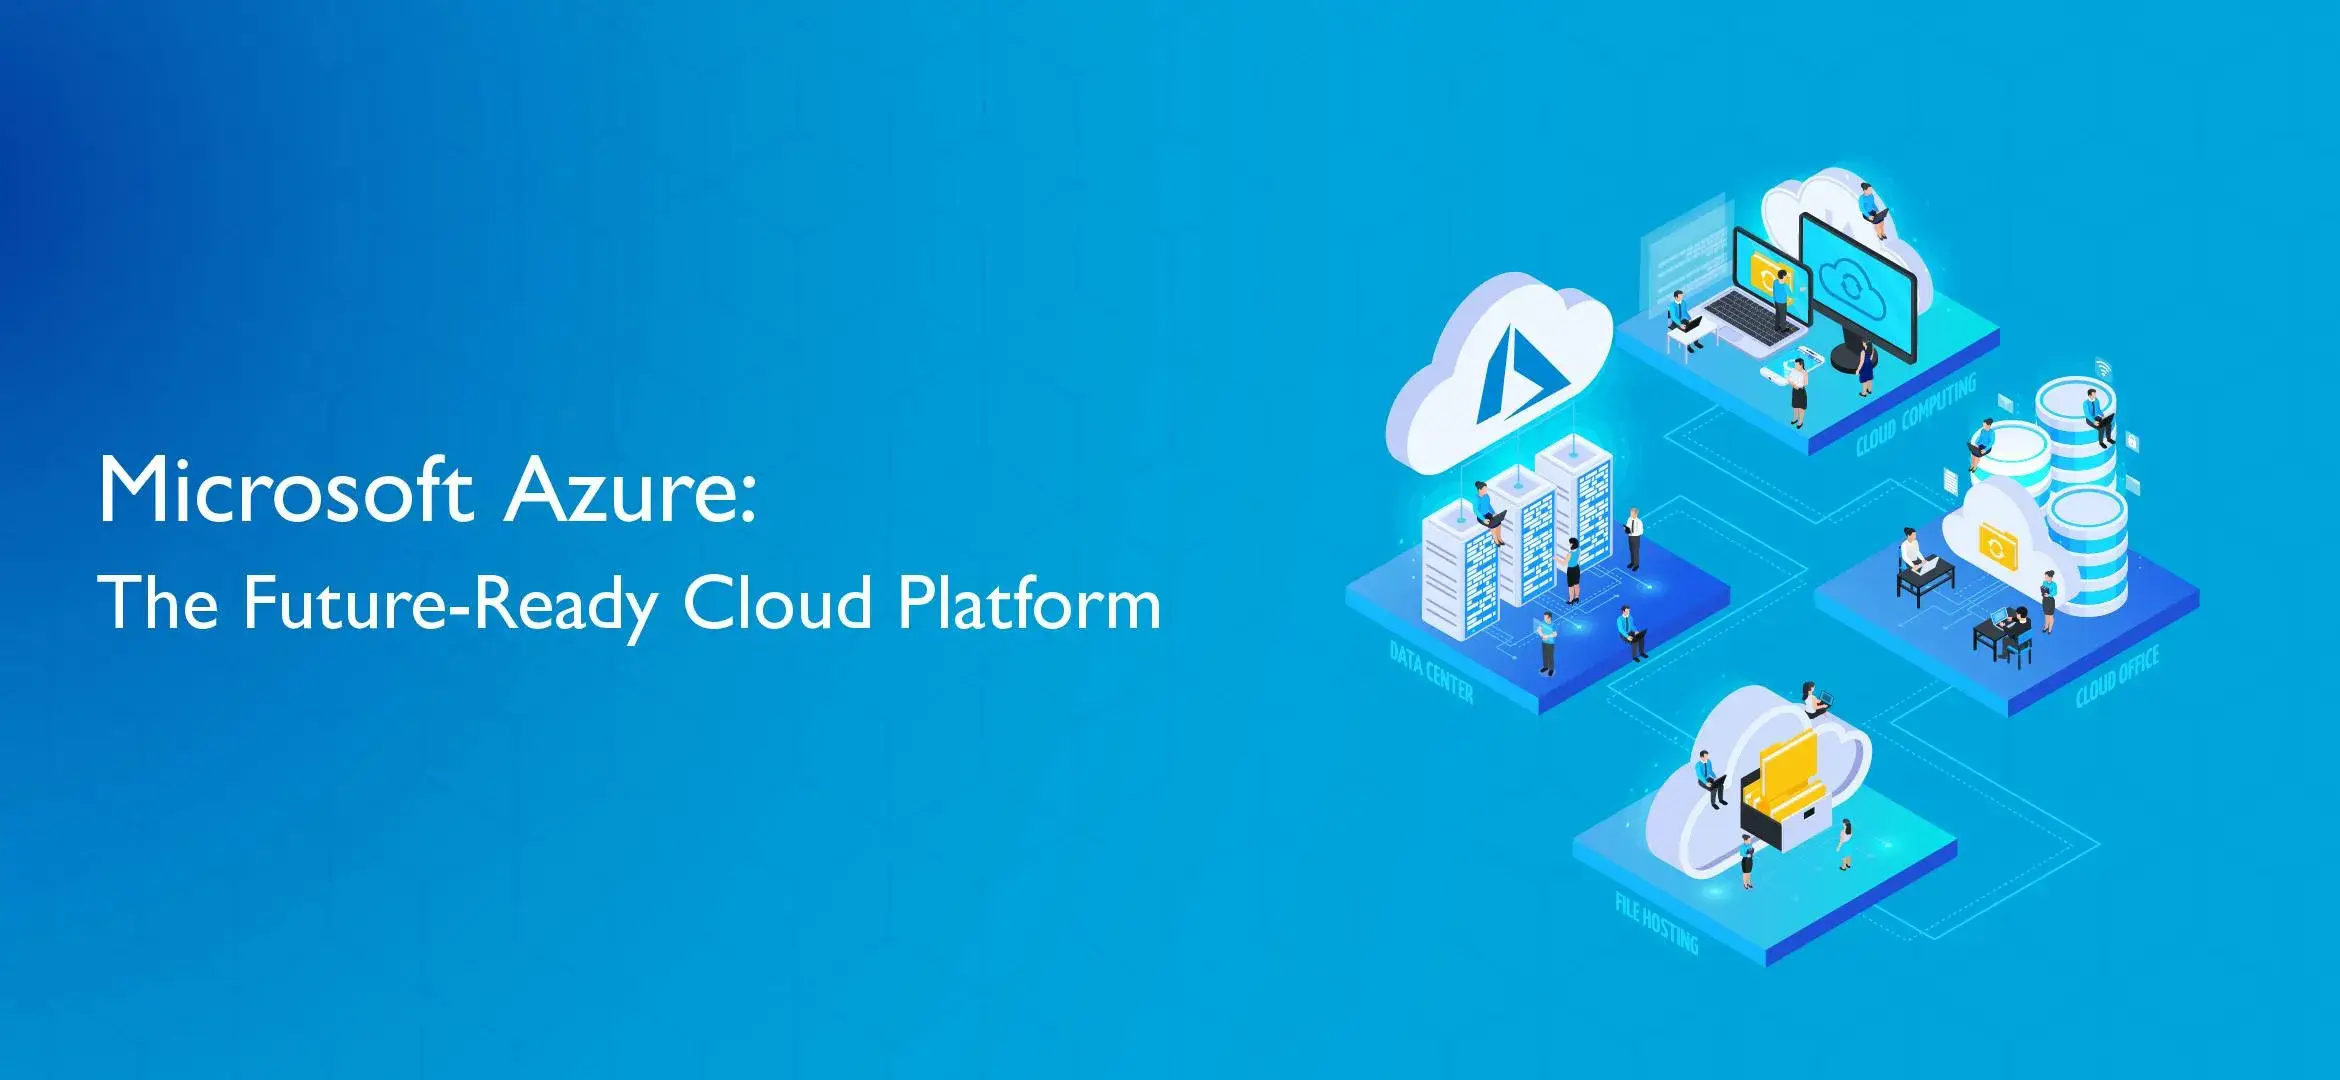 1712232993Microsoft Azure The Future-Ready Cloud Platform.webp